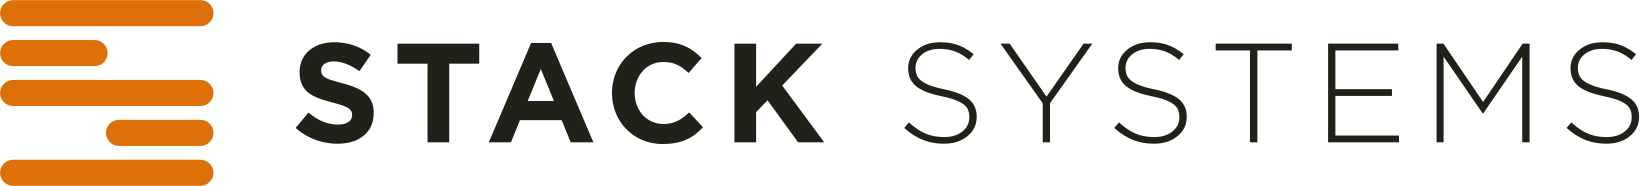 stack systems kz logo